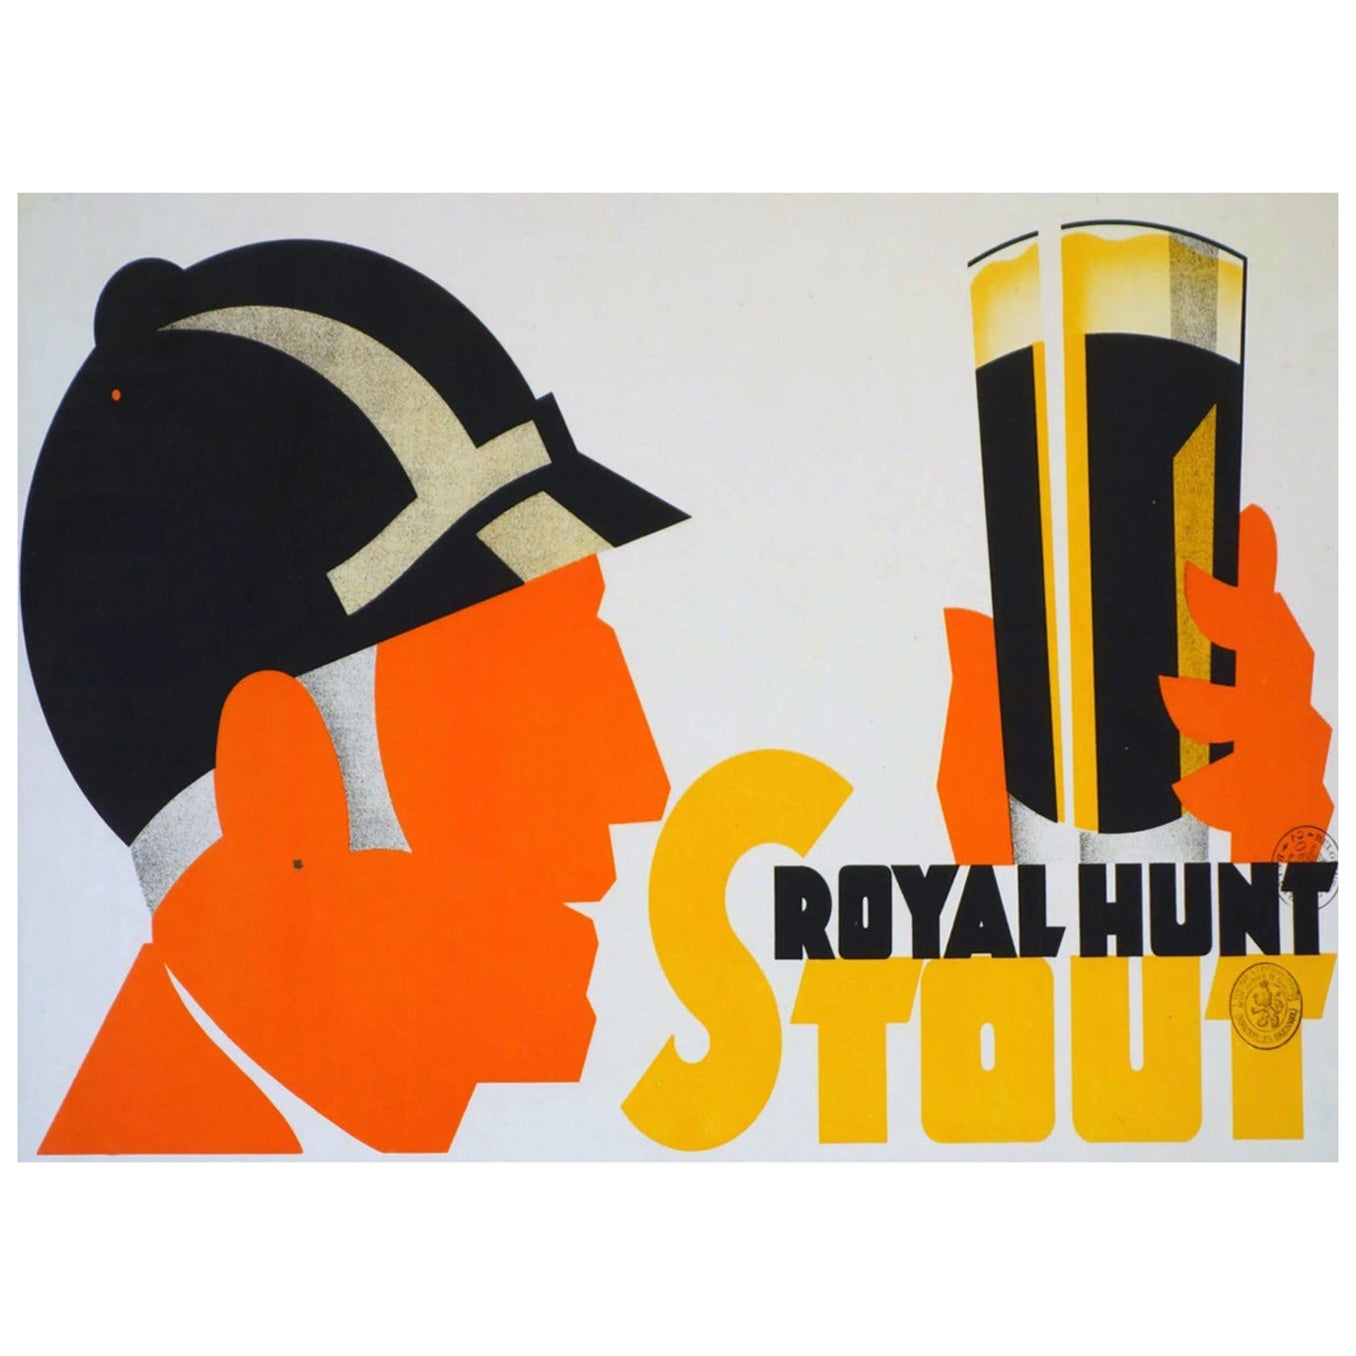 Original-Vintage-Poster, Royal Hunt Stout, Royal Hunt Stout, 1930